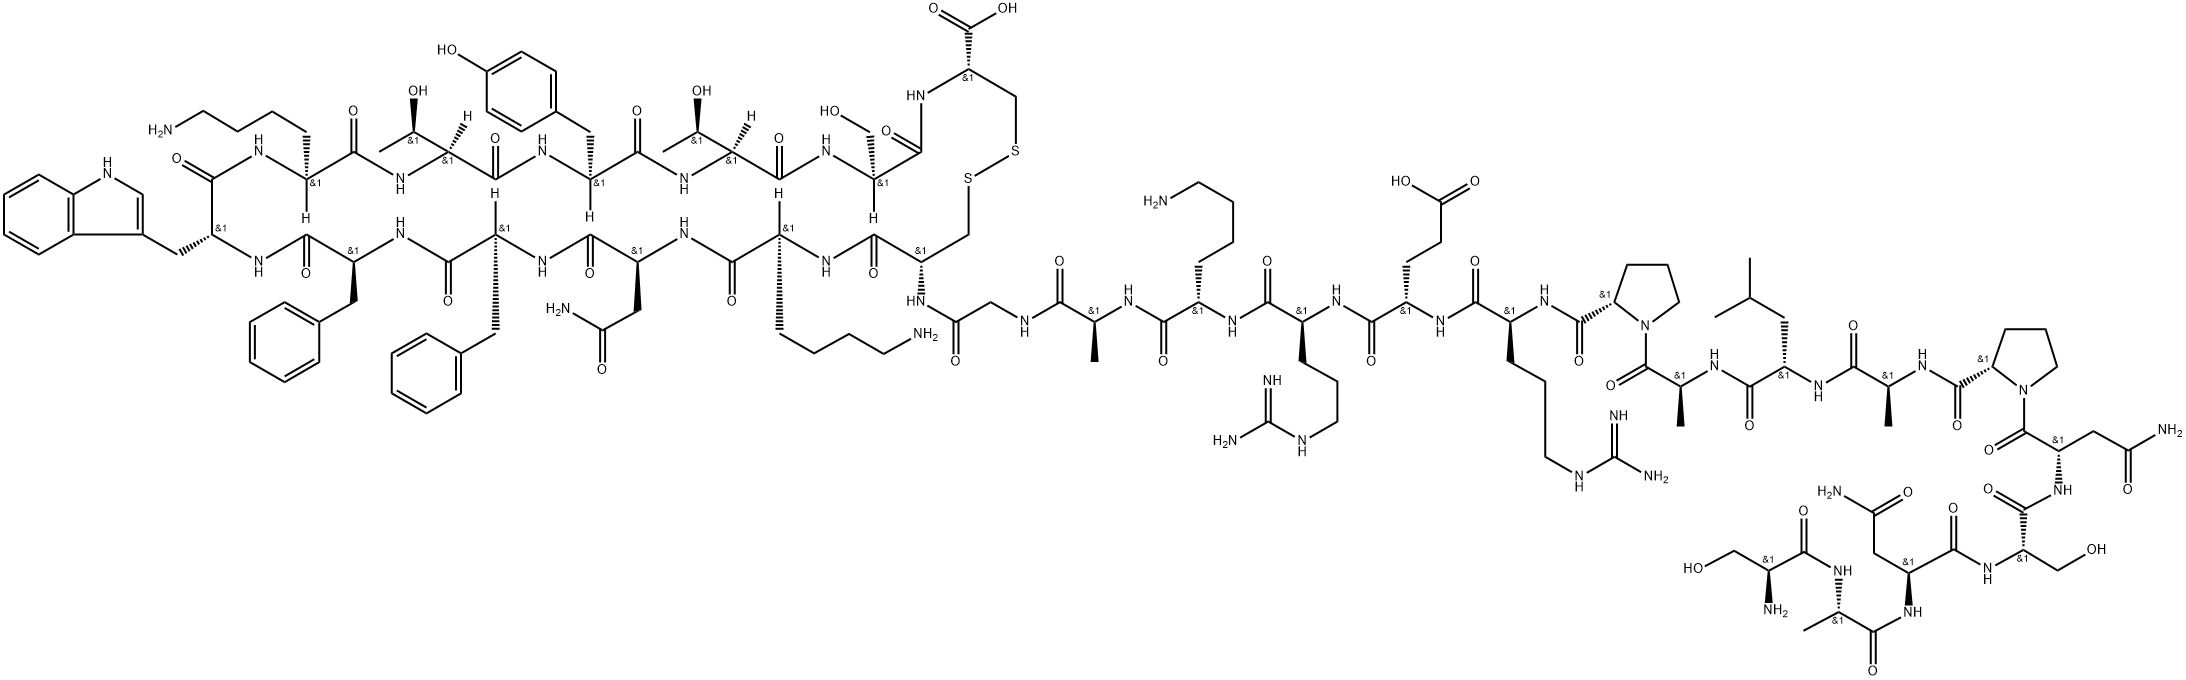 (LEU8,D-TRP22,TYR25)-SOMATOSTATIN 28 Structure